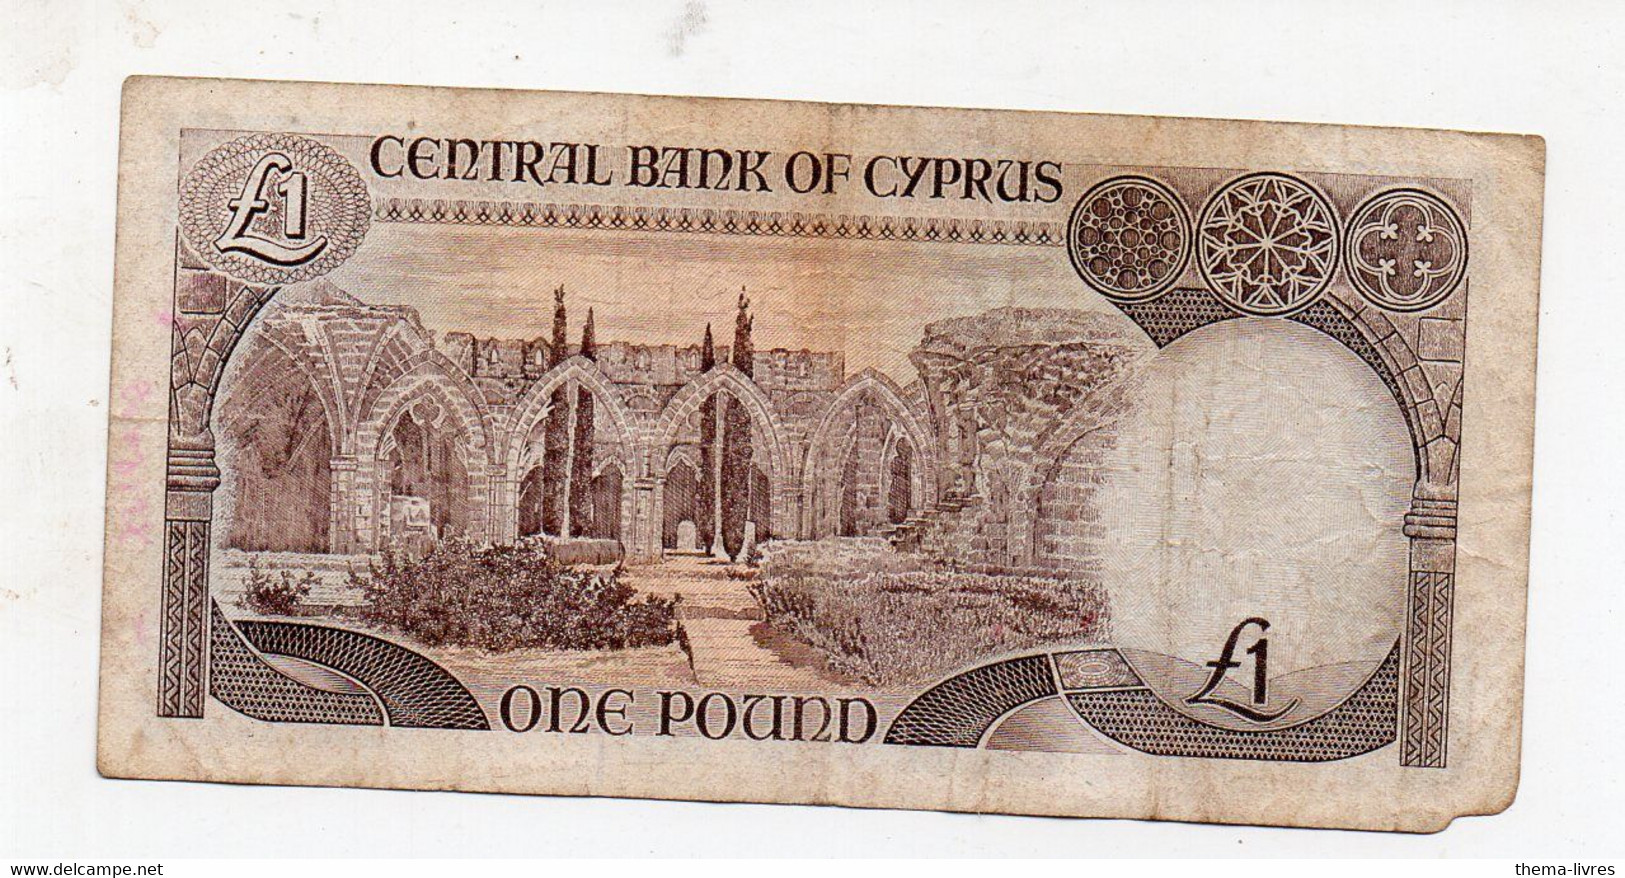 Cyprus / Chypre : Billet De One Pound 1992  (PPP35008) - Chipre